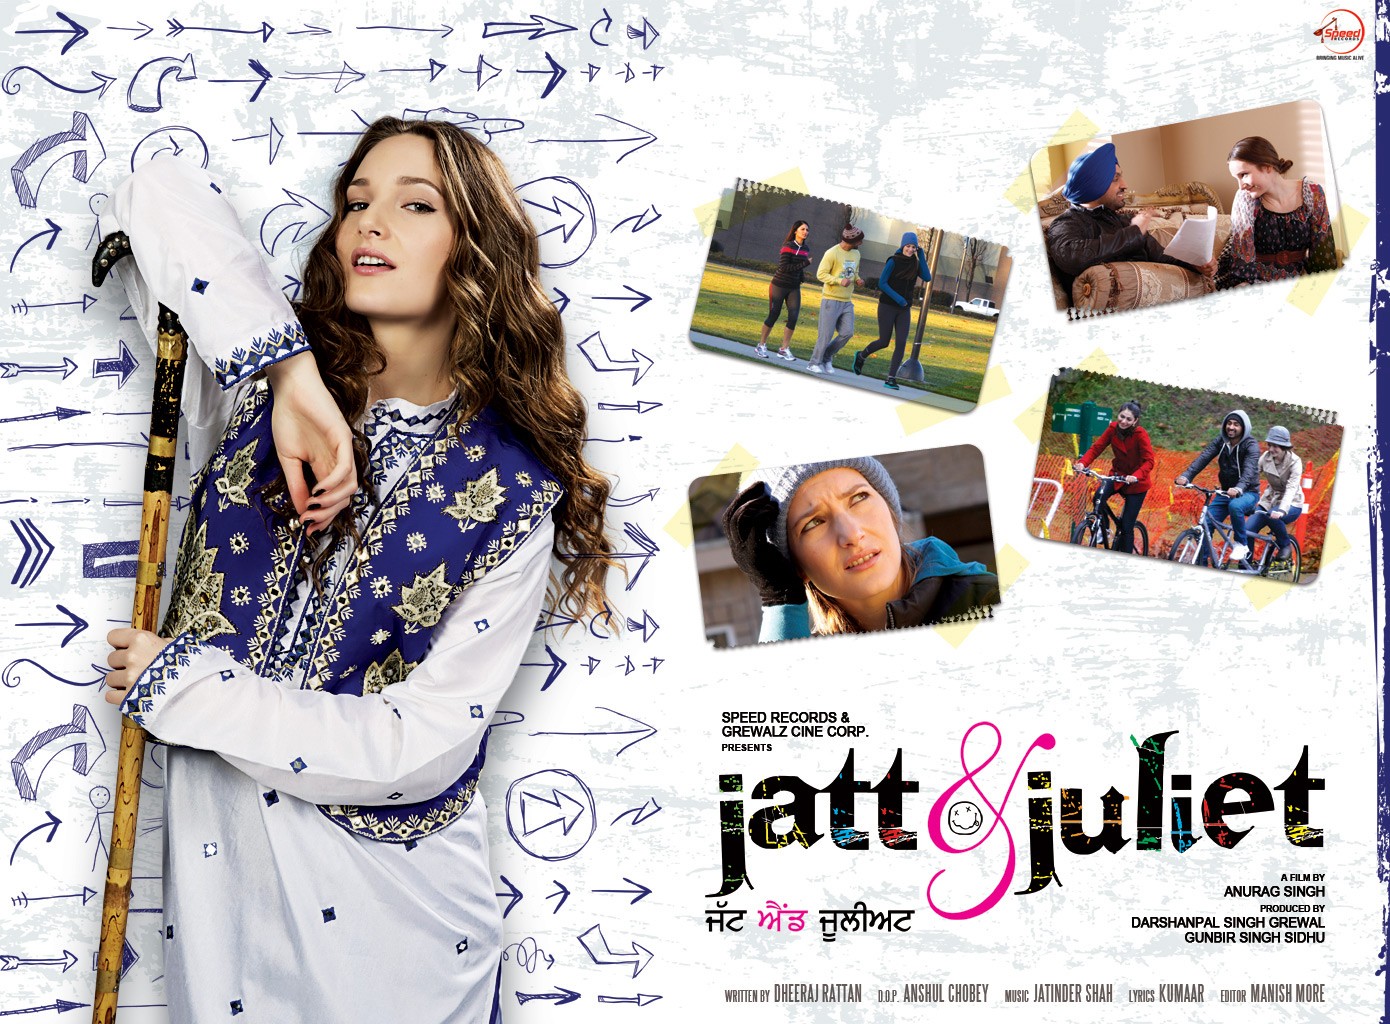 Extra Large Movie Poster Image for Jatt & Juliet (#7 of 9)